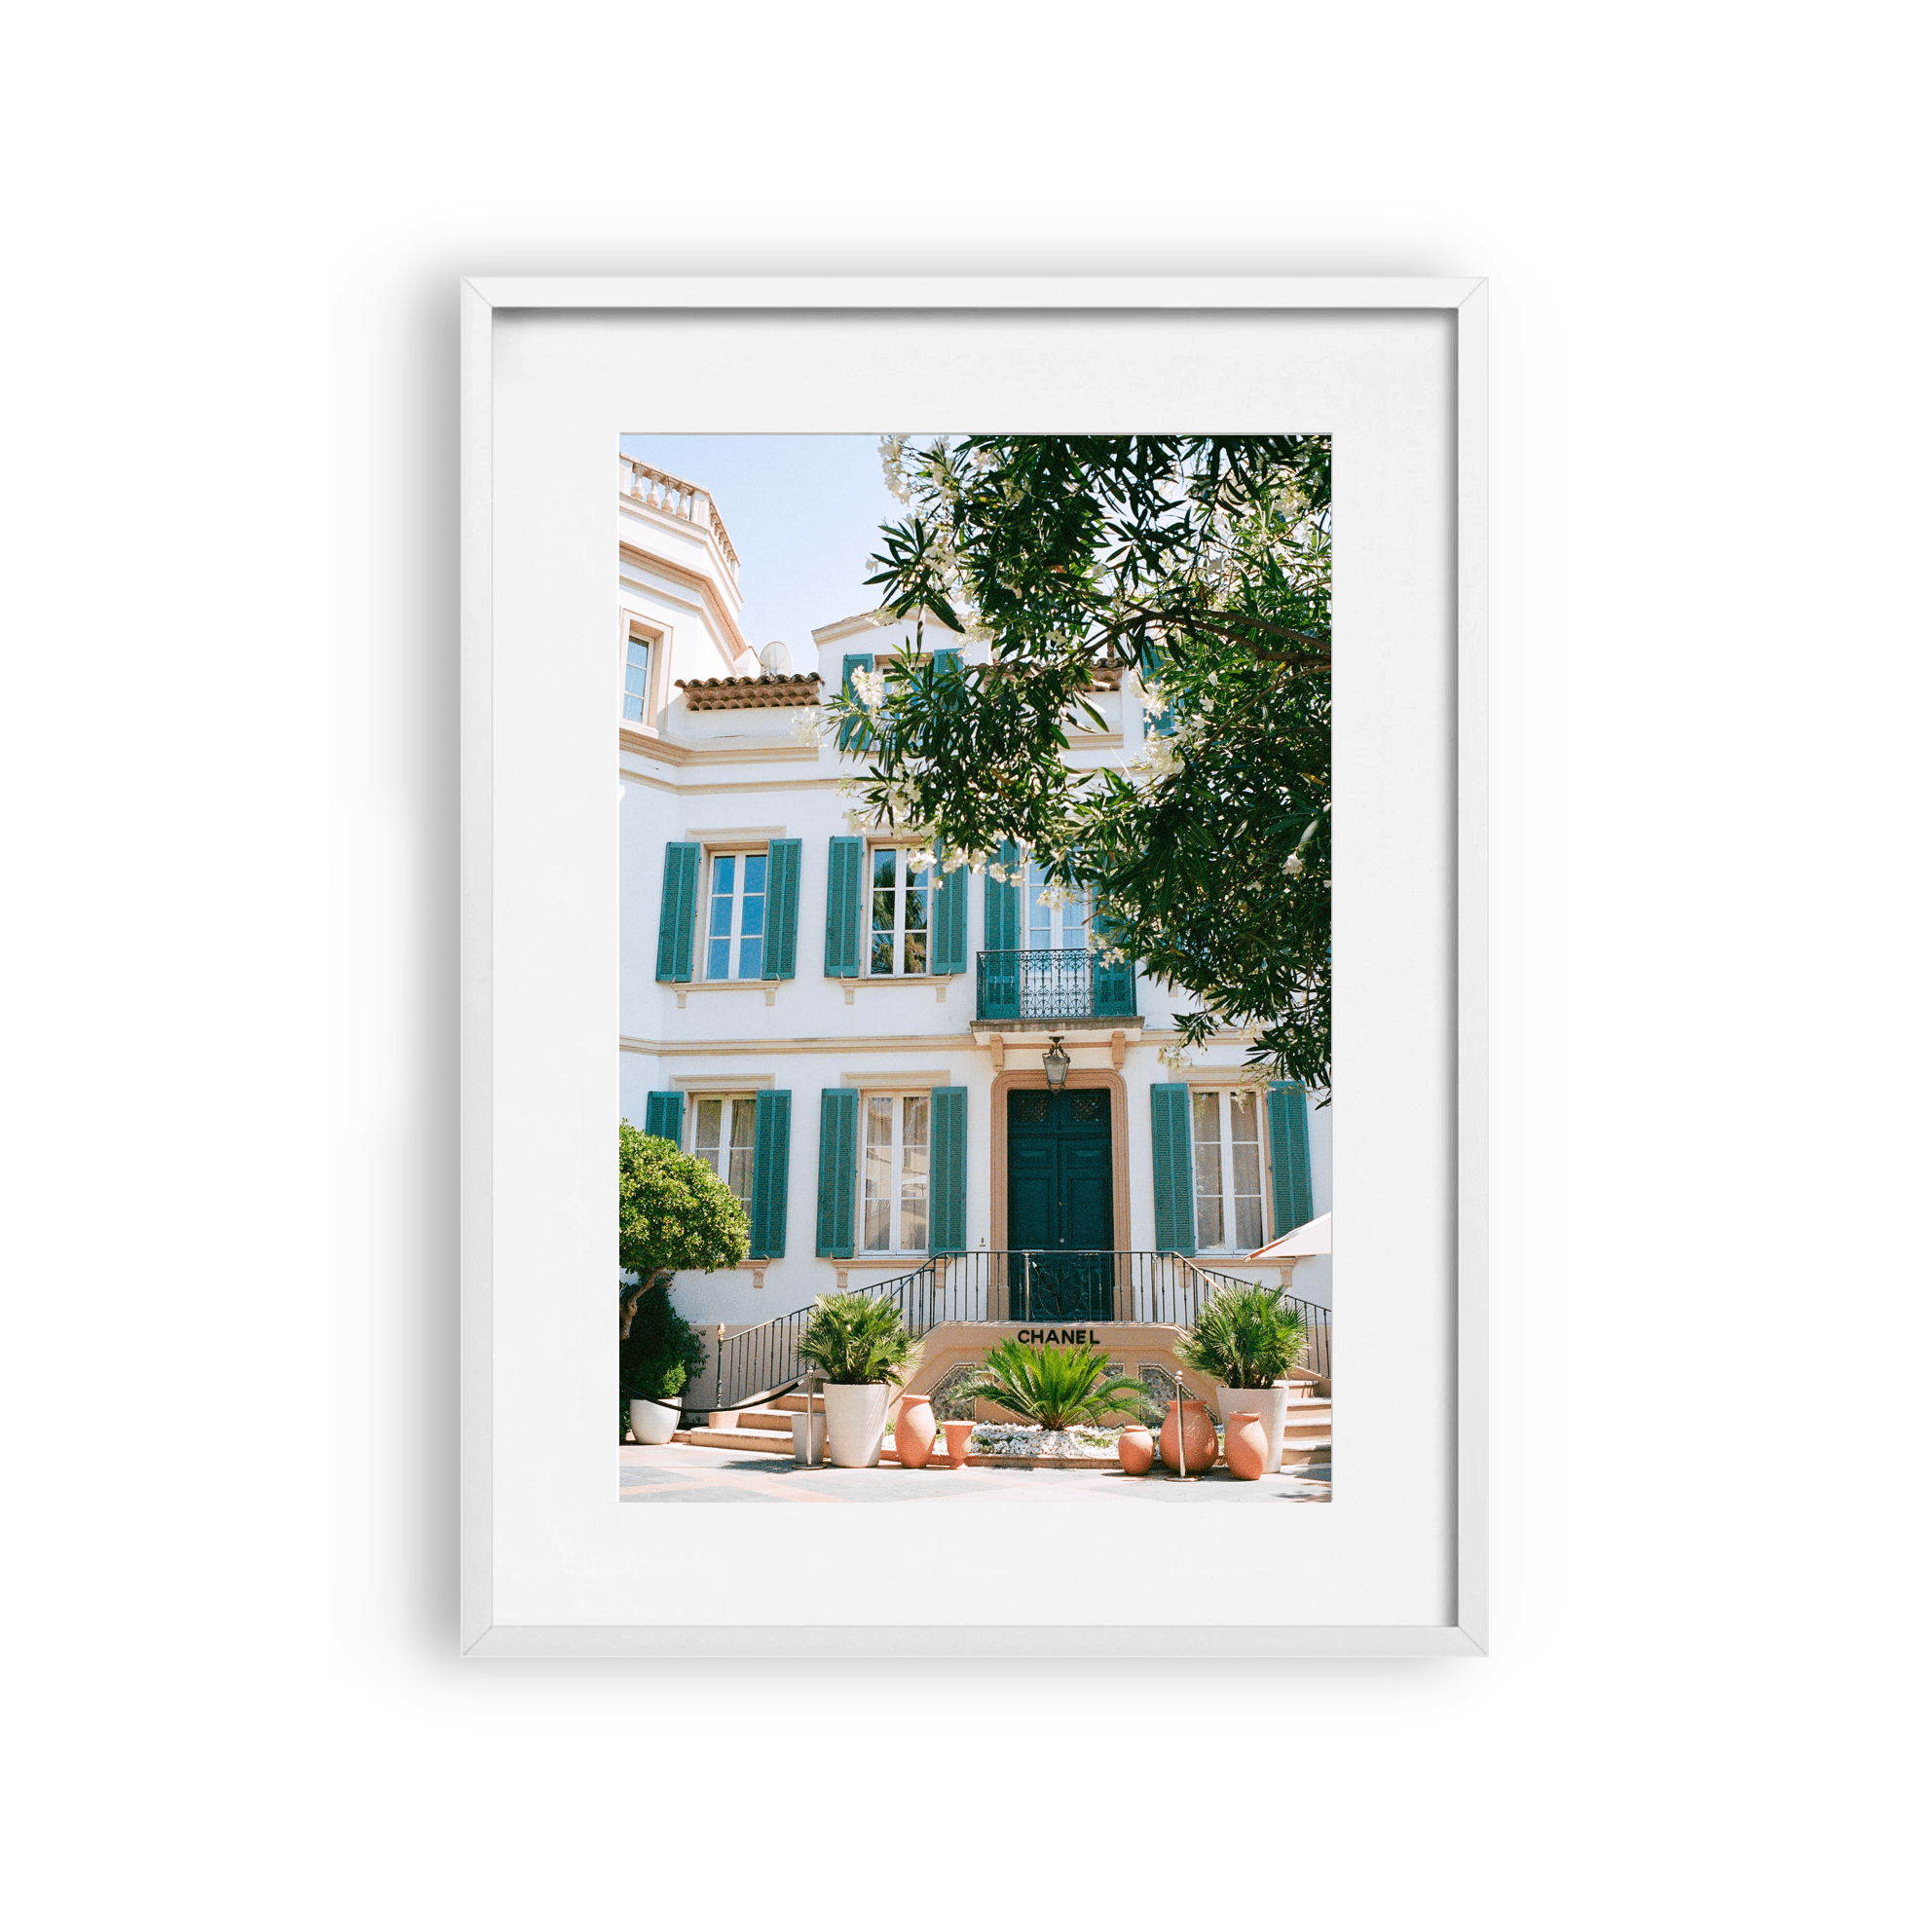 Fine Art Photography Print - Contenu Studio - Chanel St Tropez